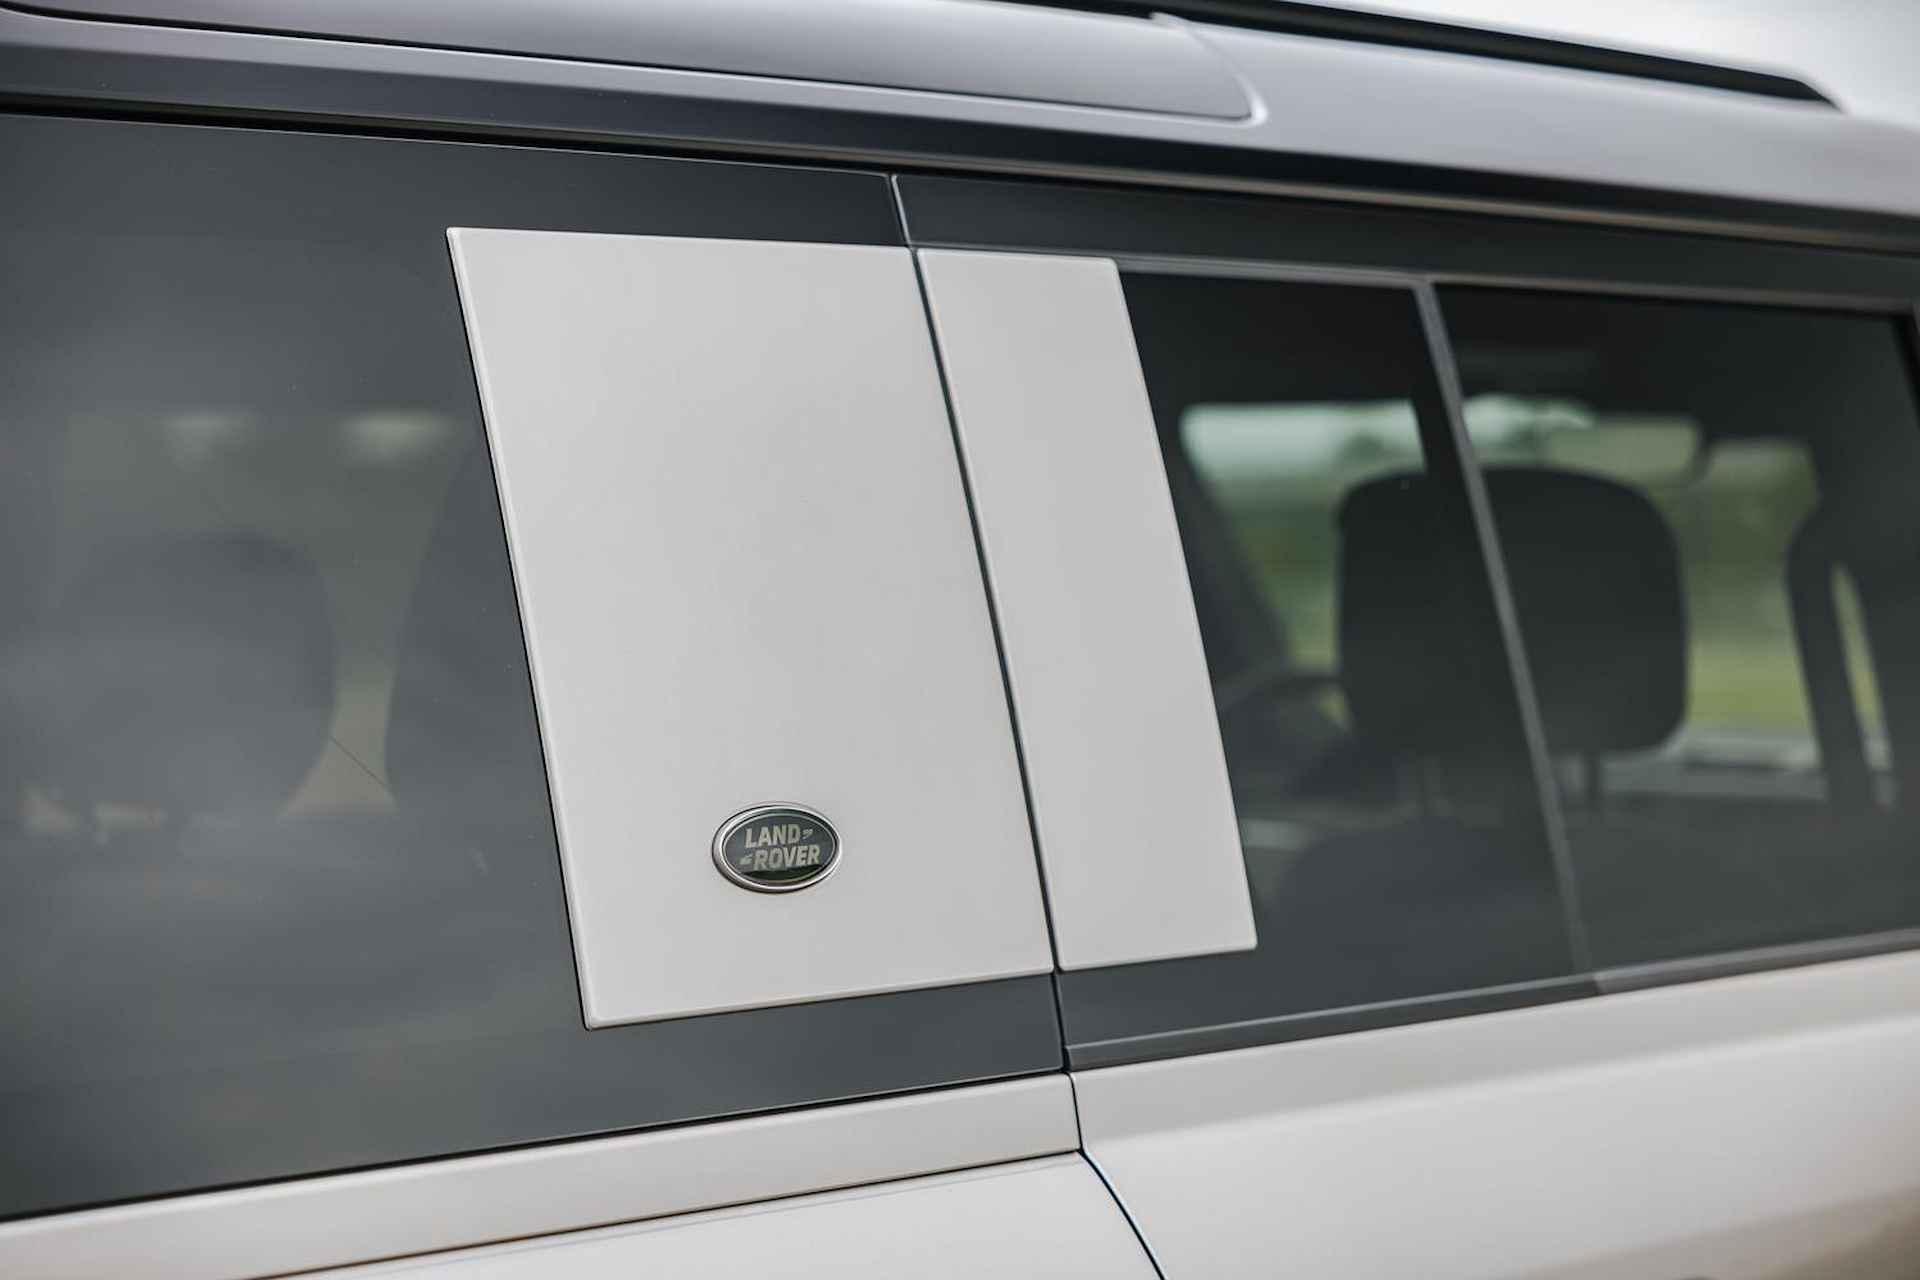 Land Rover Defender 2.0 P400e 110 X-Dynamic HSE | Panoramadak | 22" Velgen in Gloss Black | 11,4" Touch Screen | Cold Climate Pack | Elektrische Trekhaak | Expedition imperiaal | Uitklapbare Dakladder| All Season Banden - 12/43